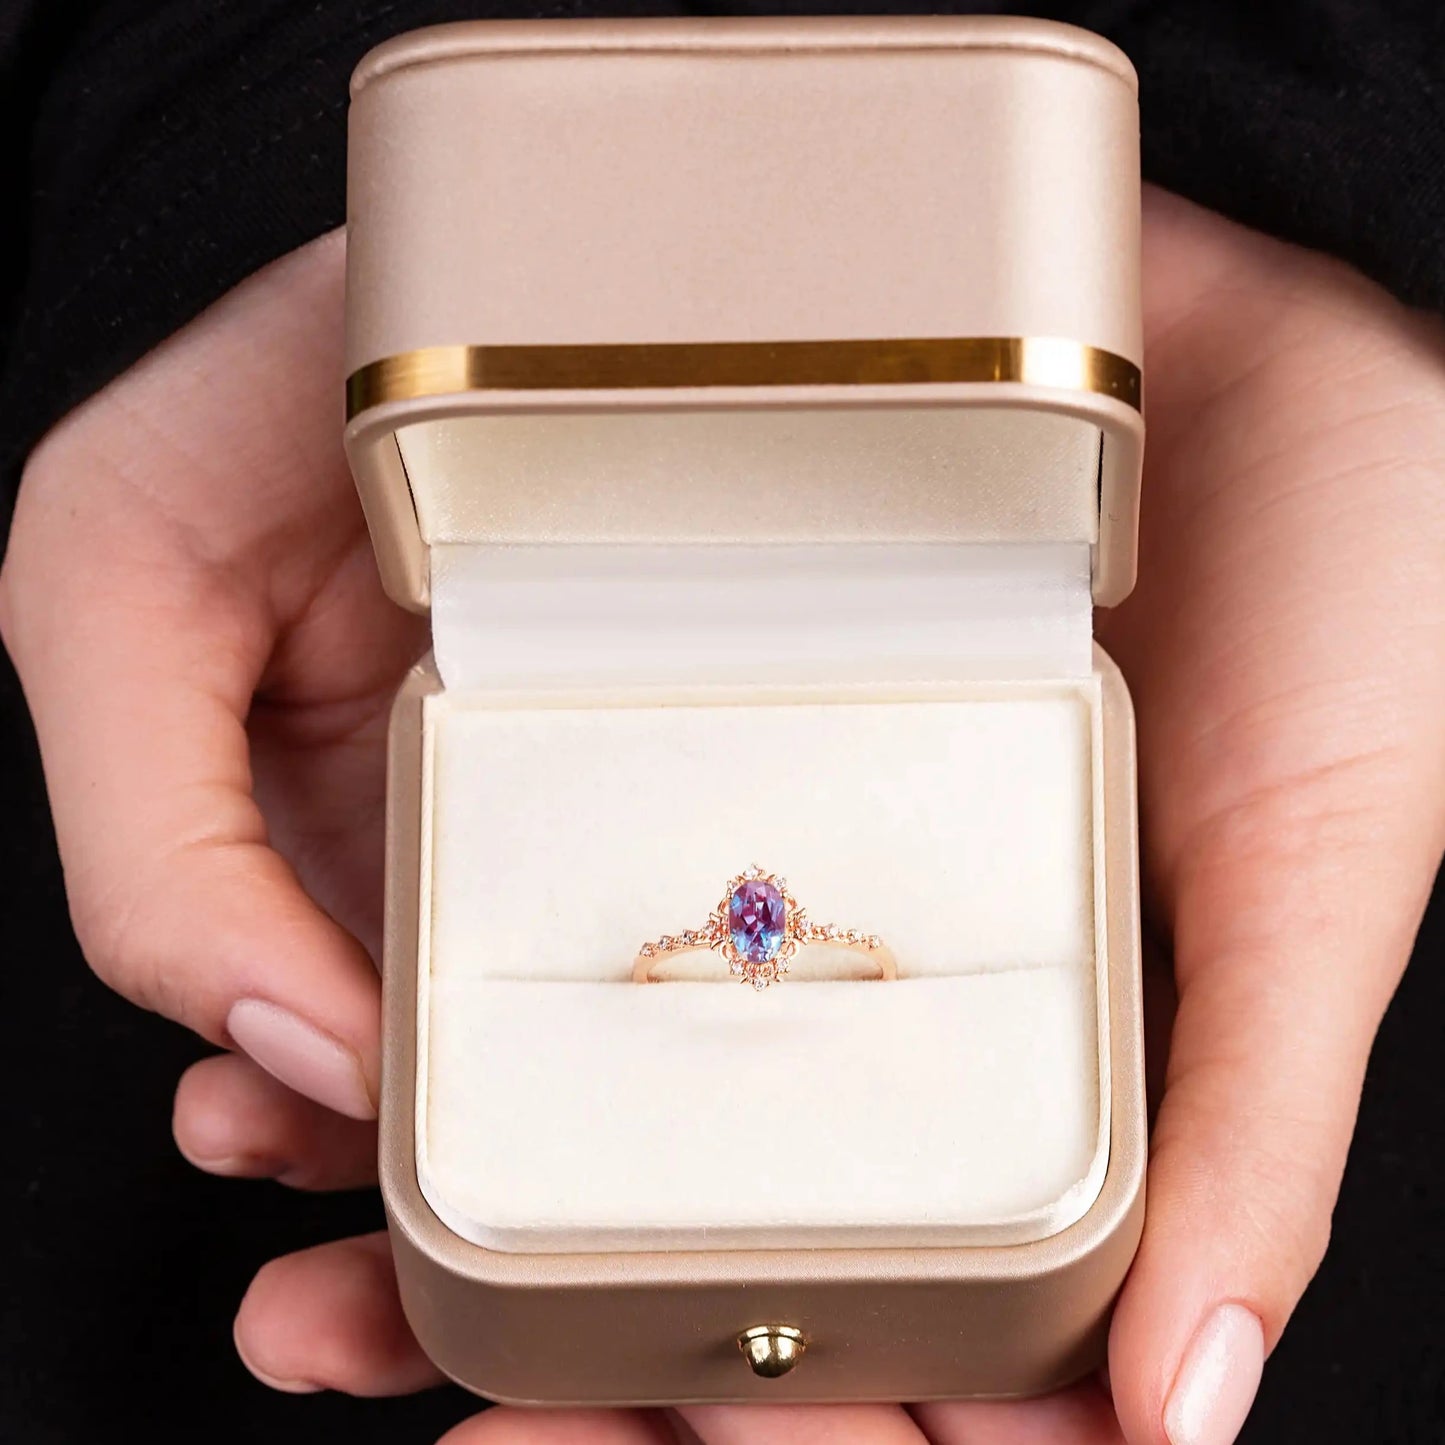 Аlexandrite wedding ring in a gold box